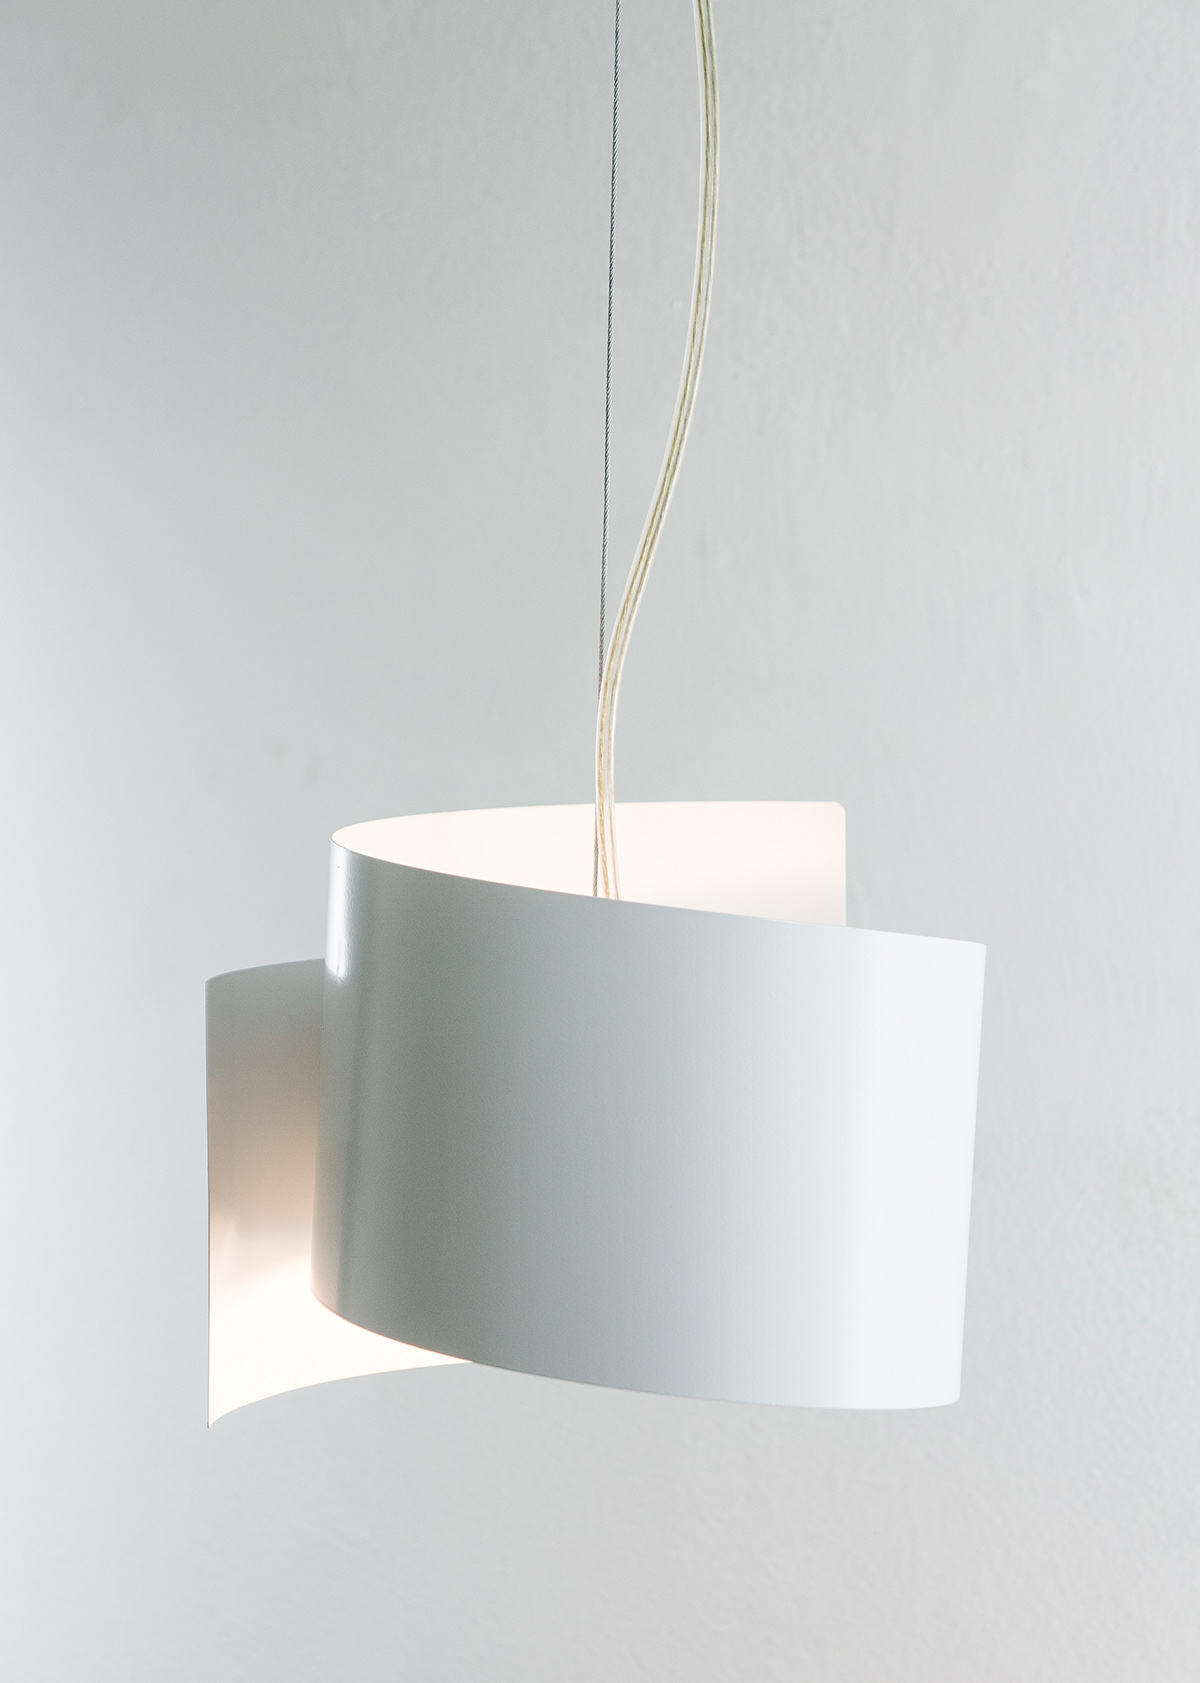 Lamp lampara Ceiling lamp illumination Iluminación blanco AZUL cobrizado copper